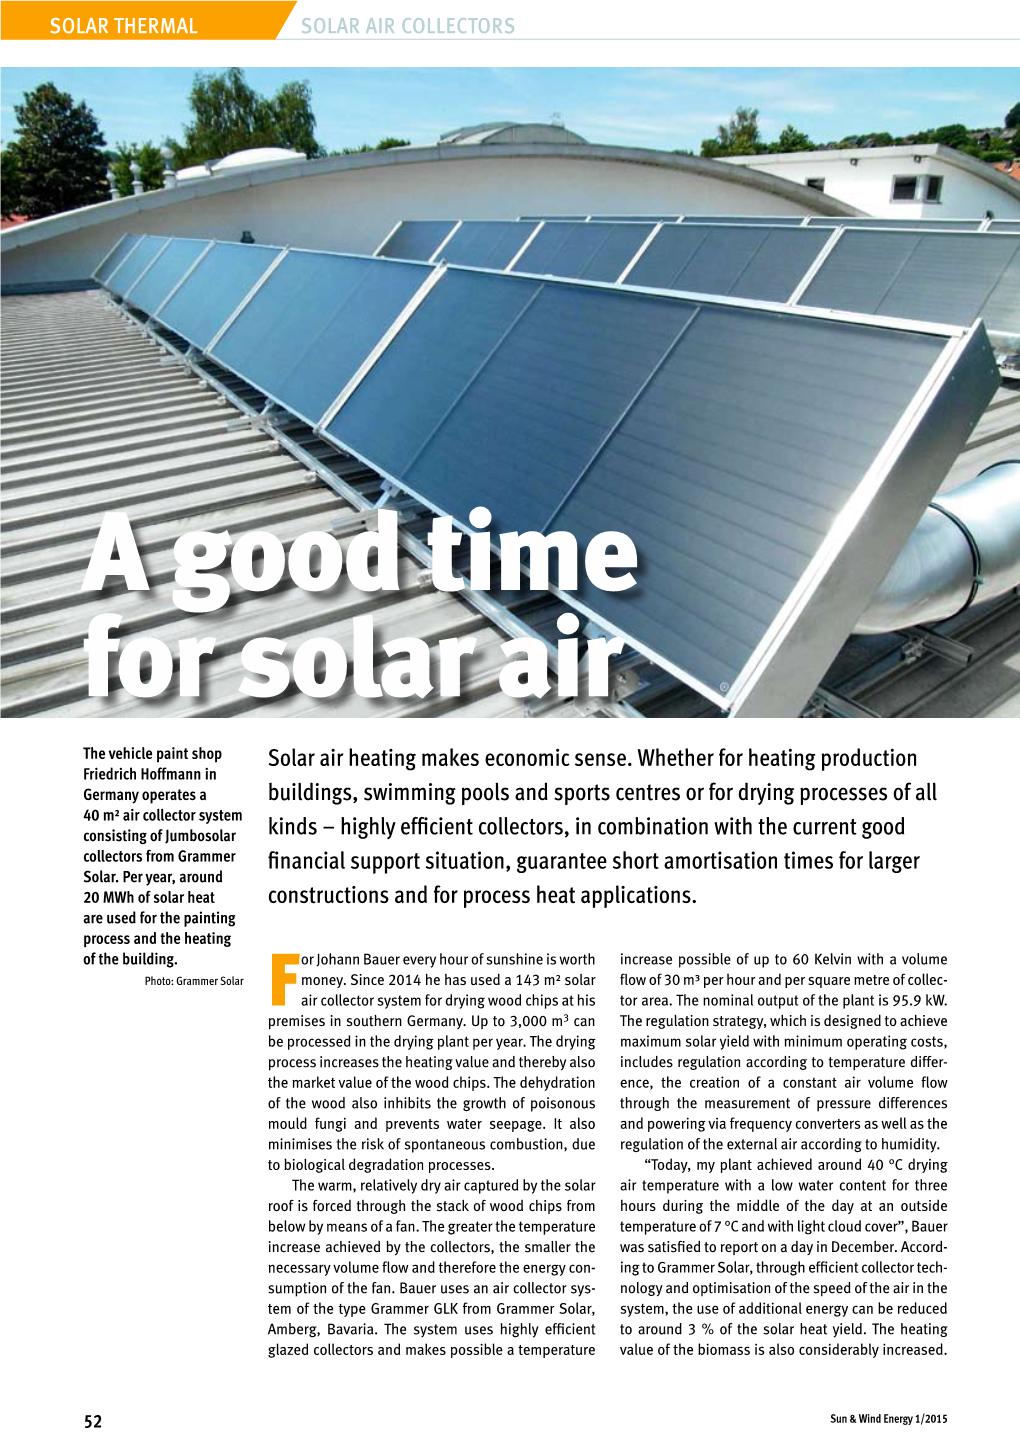 A Good Time for Solar Air